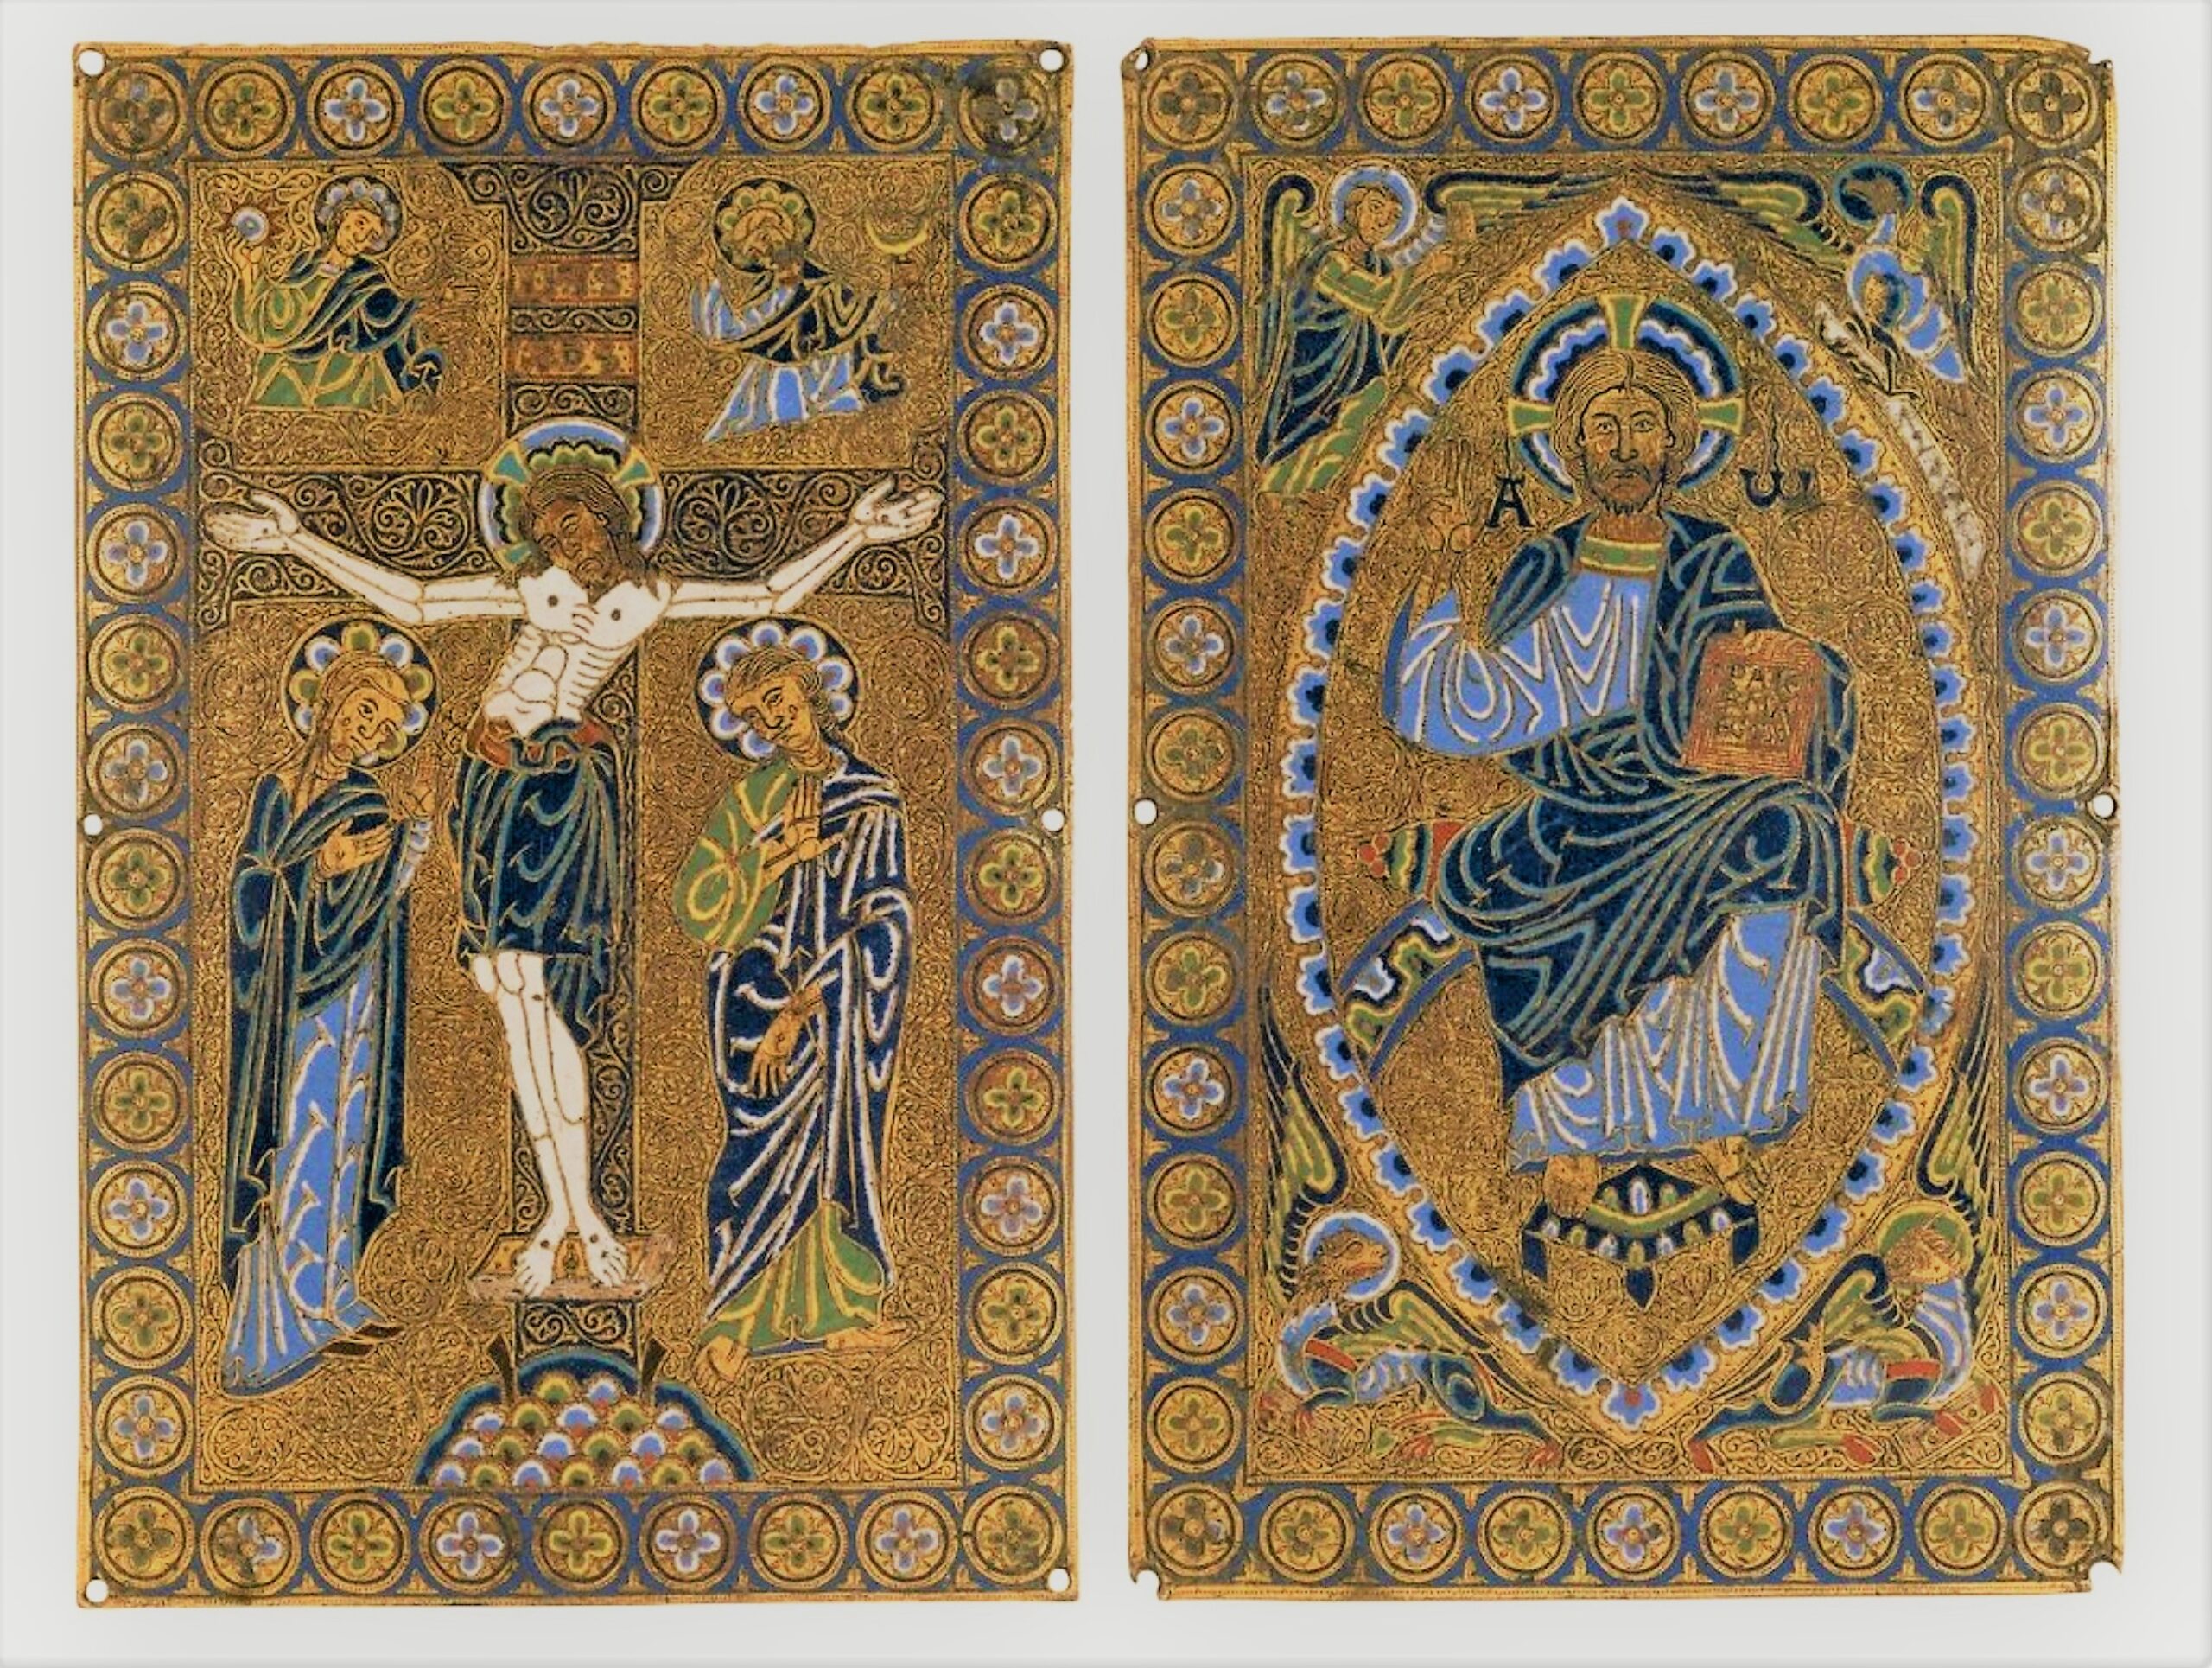 1175-80 Crucifixion cosmique MBA Lyon